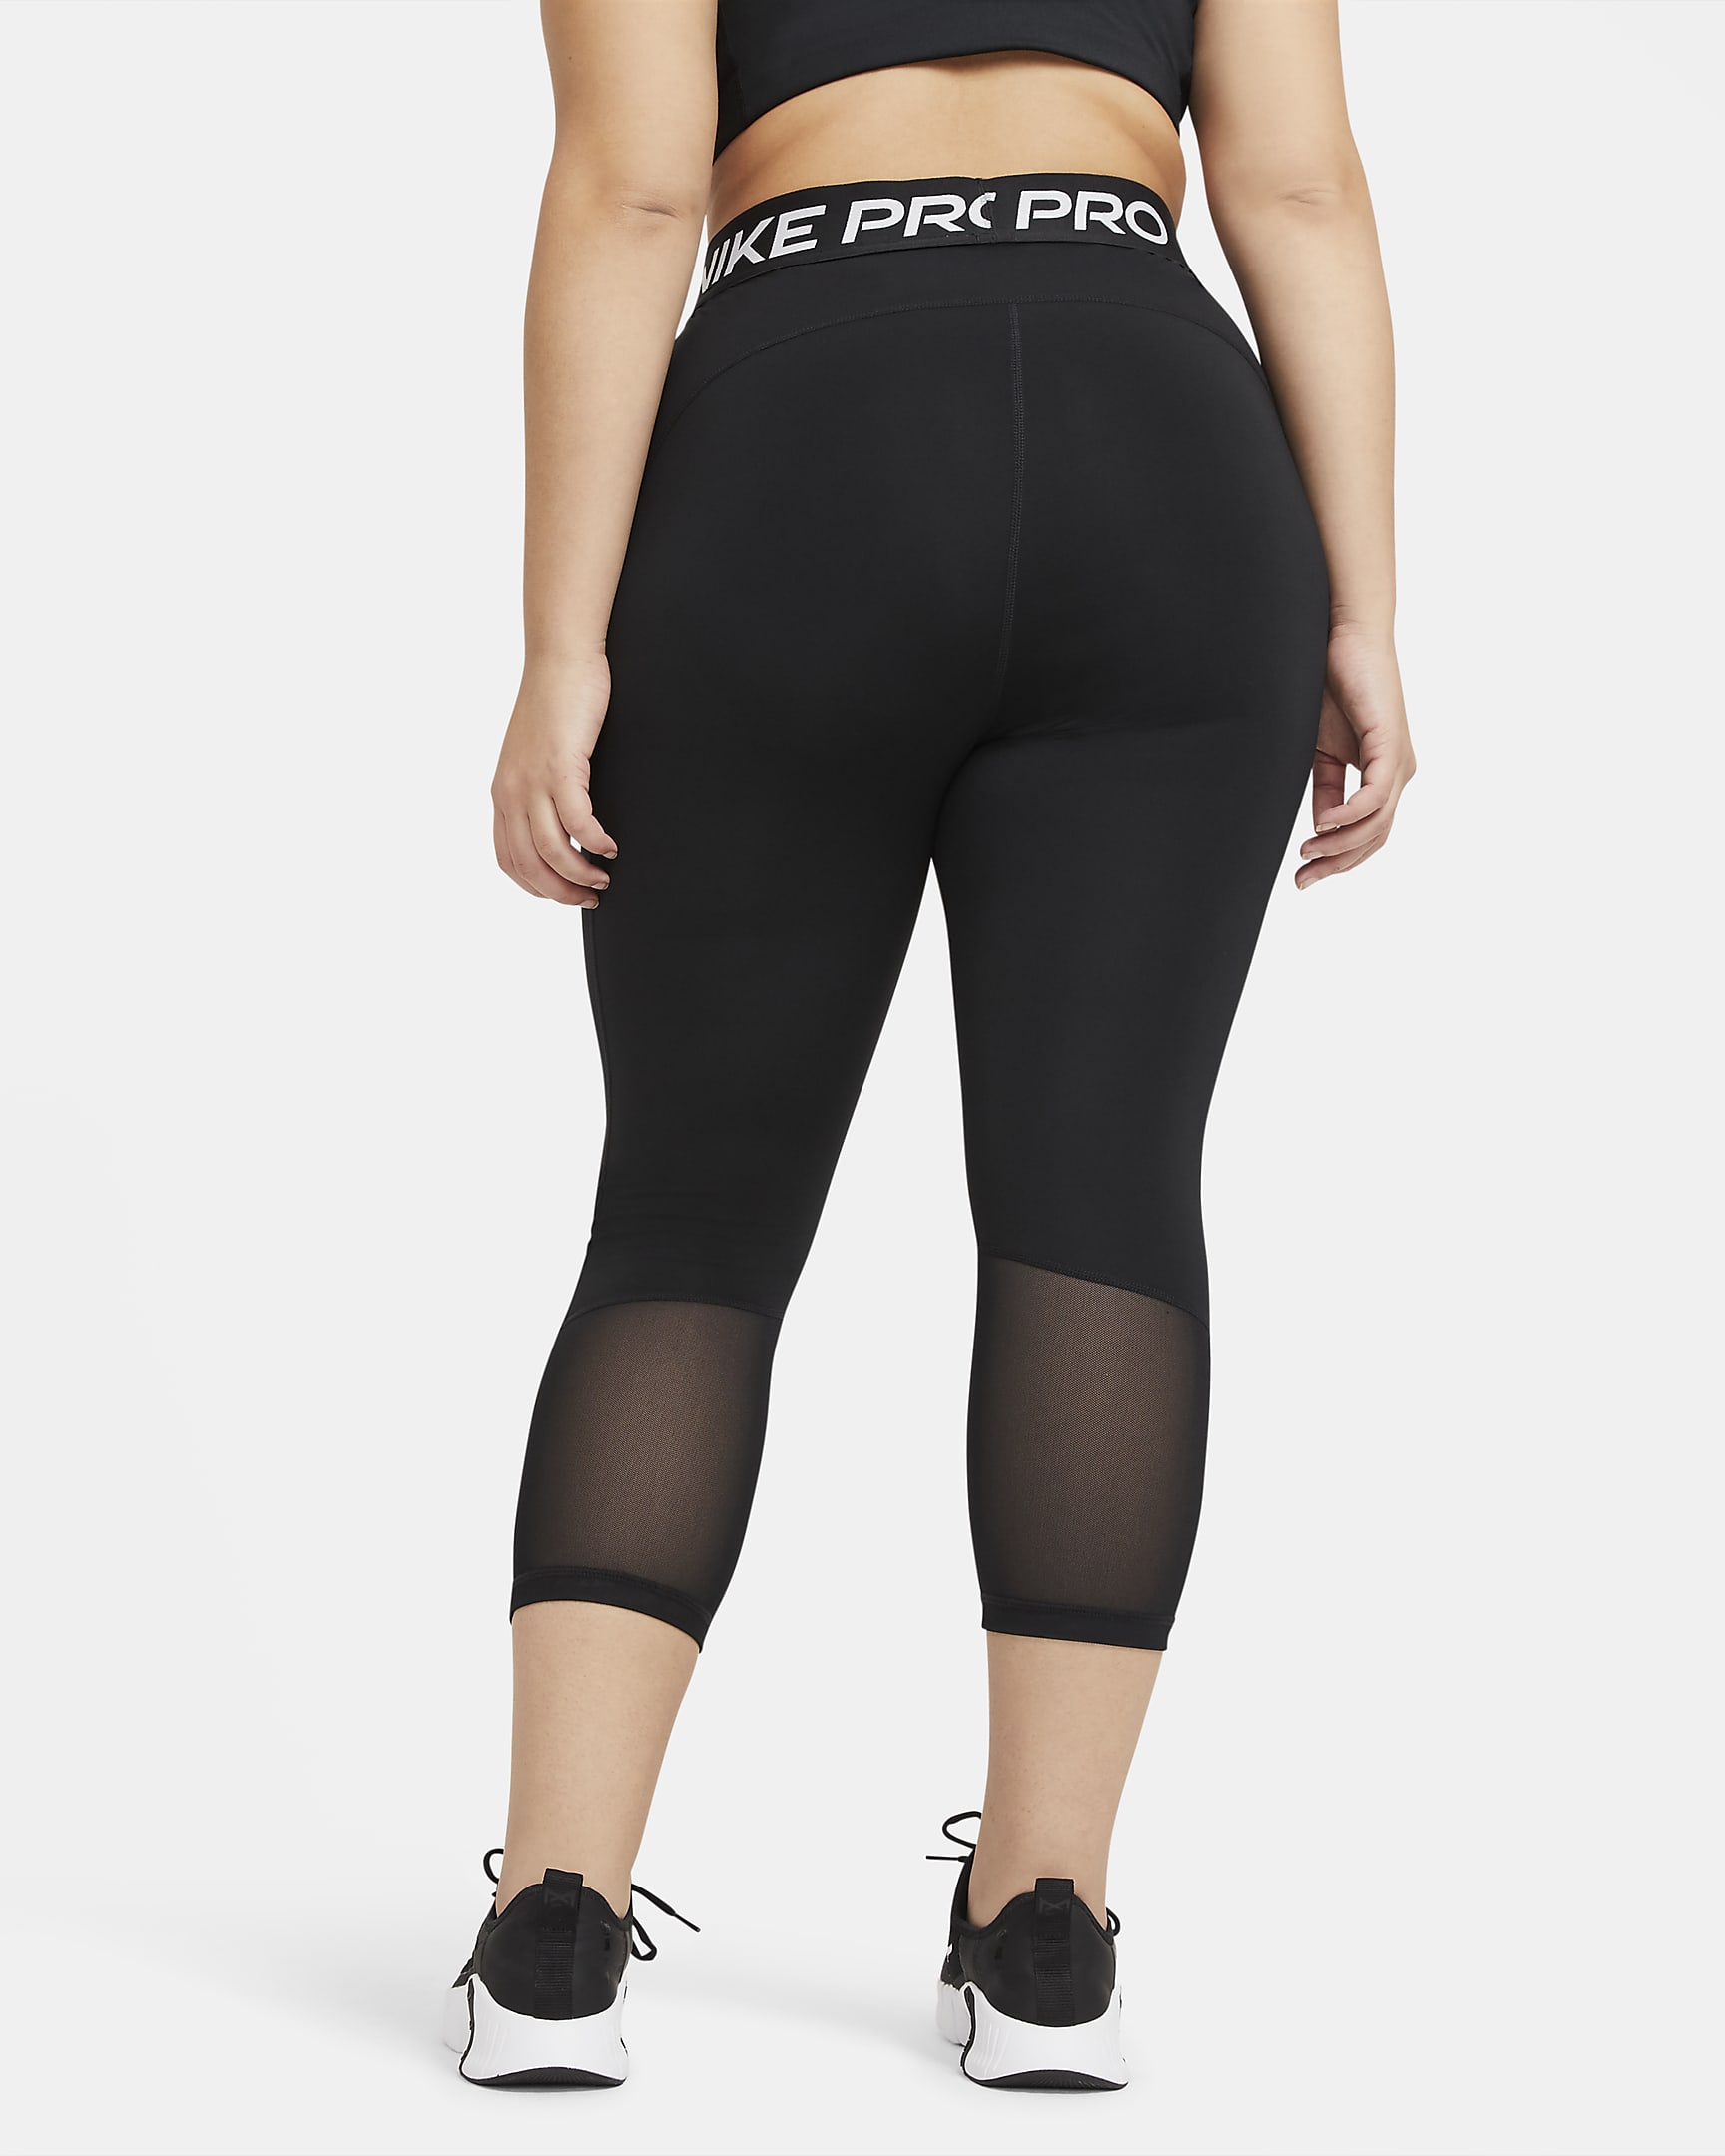 Nike Pro Women's Mid-Rise Crop Leggings (Plus Size) - Black/White